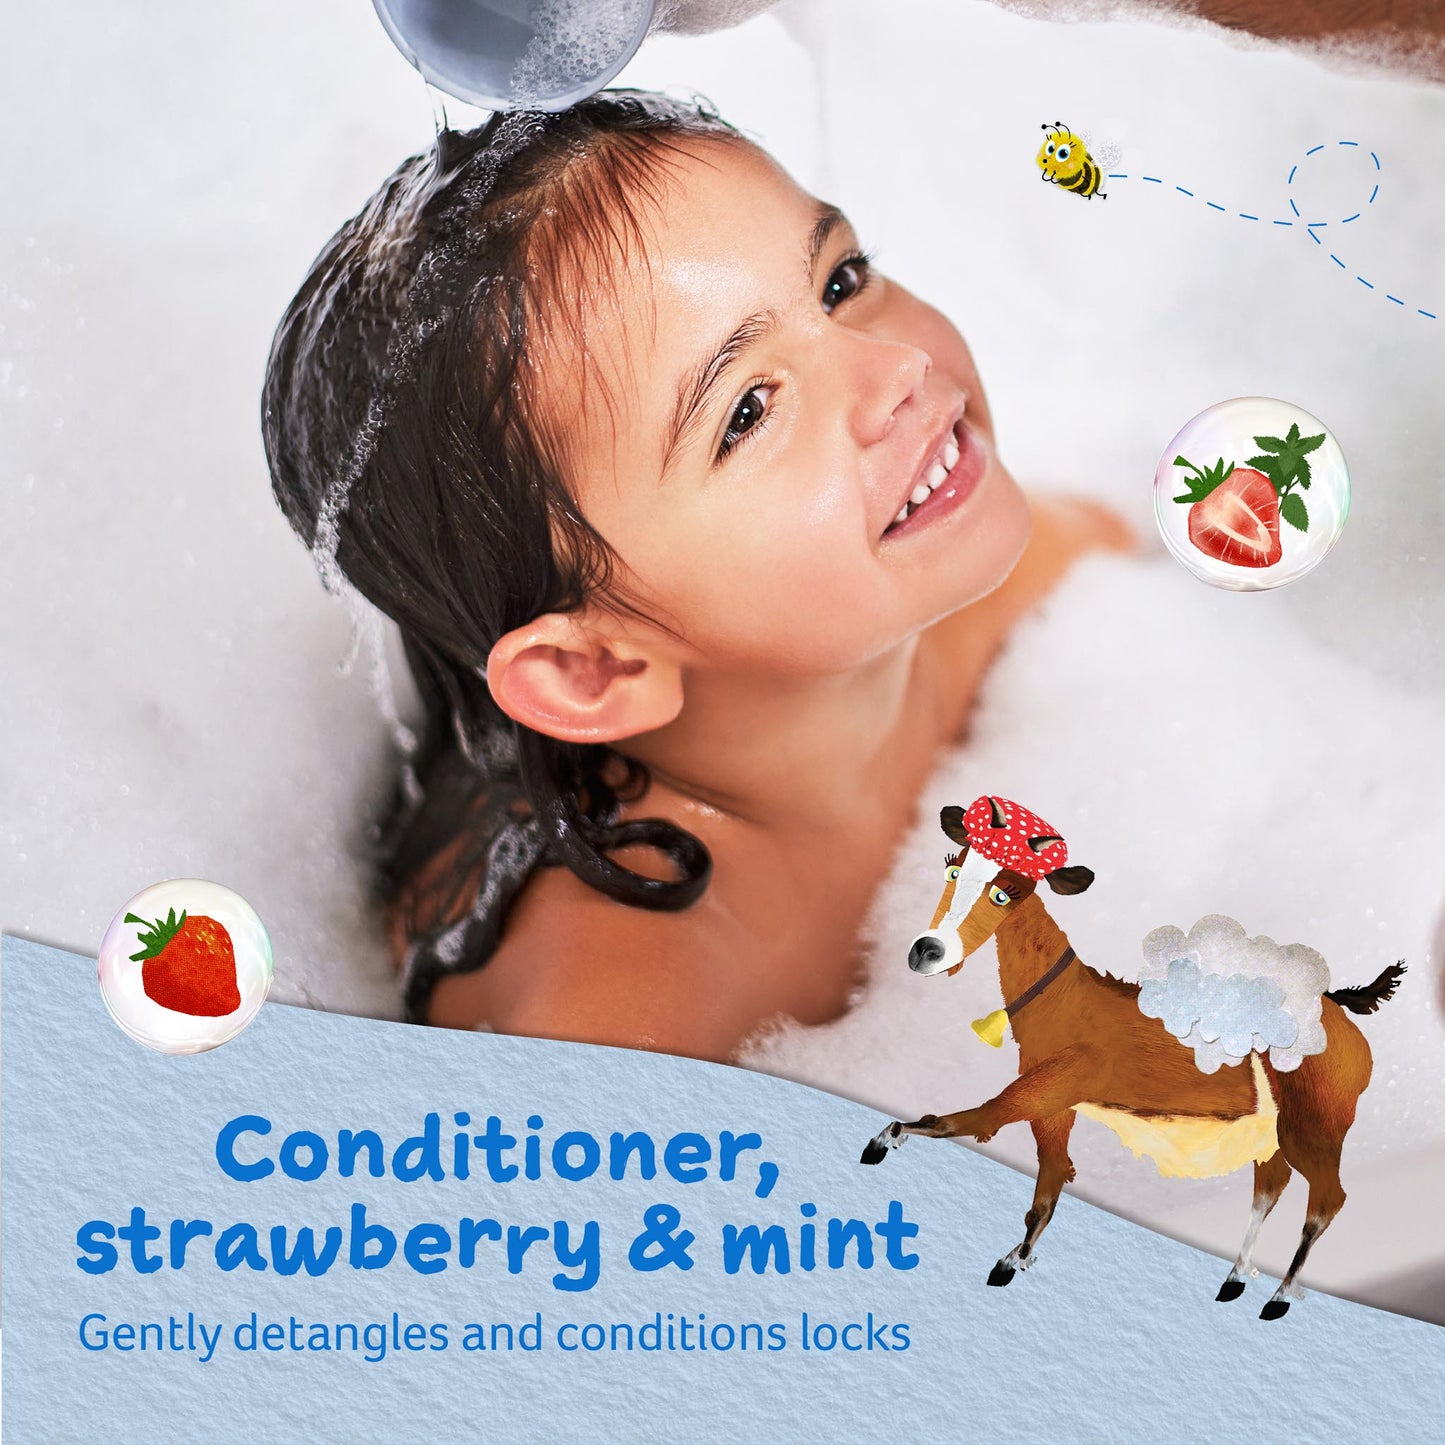 Childs Farm conditioner strawberry & organic mint